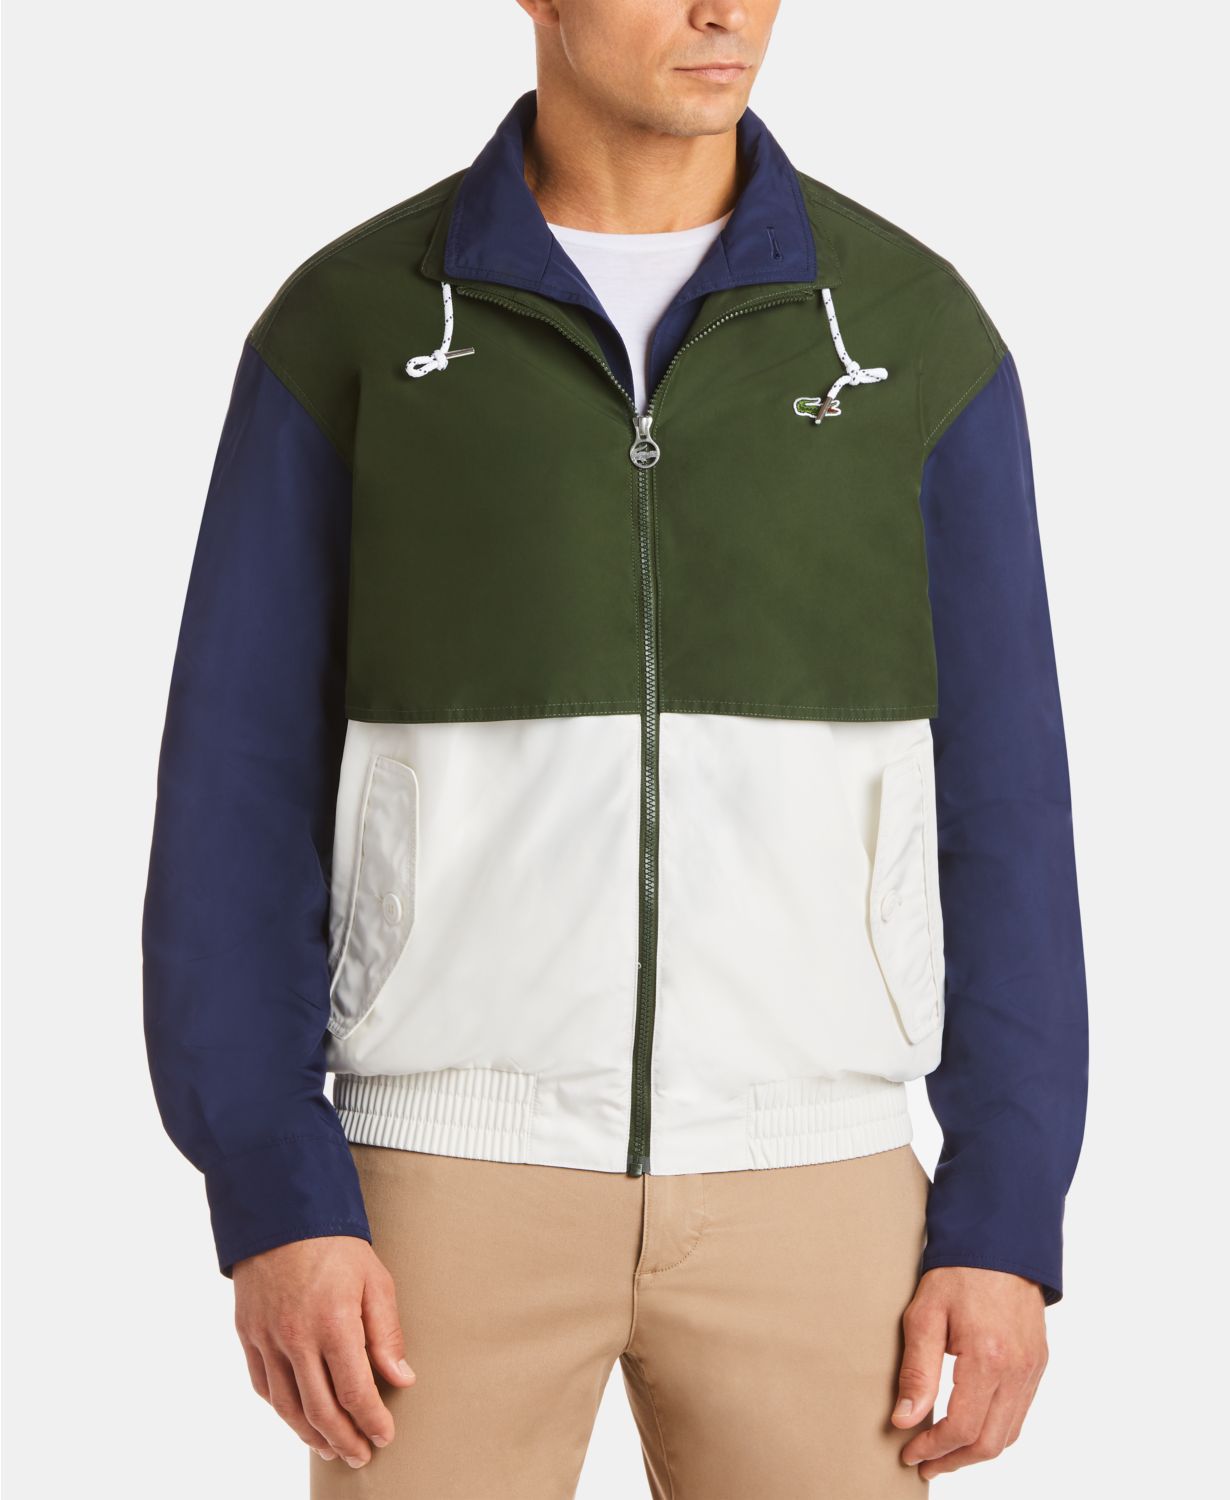 Lacoste Men's Lightweight Colorblocked Jacket